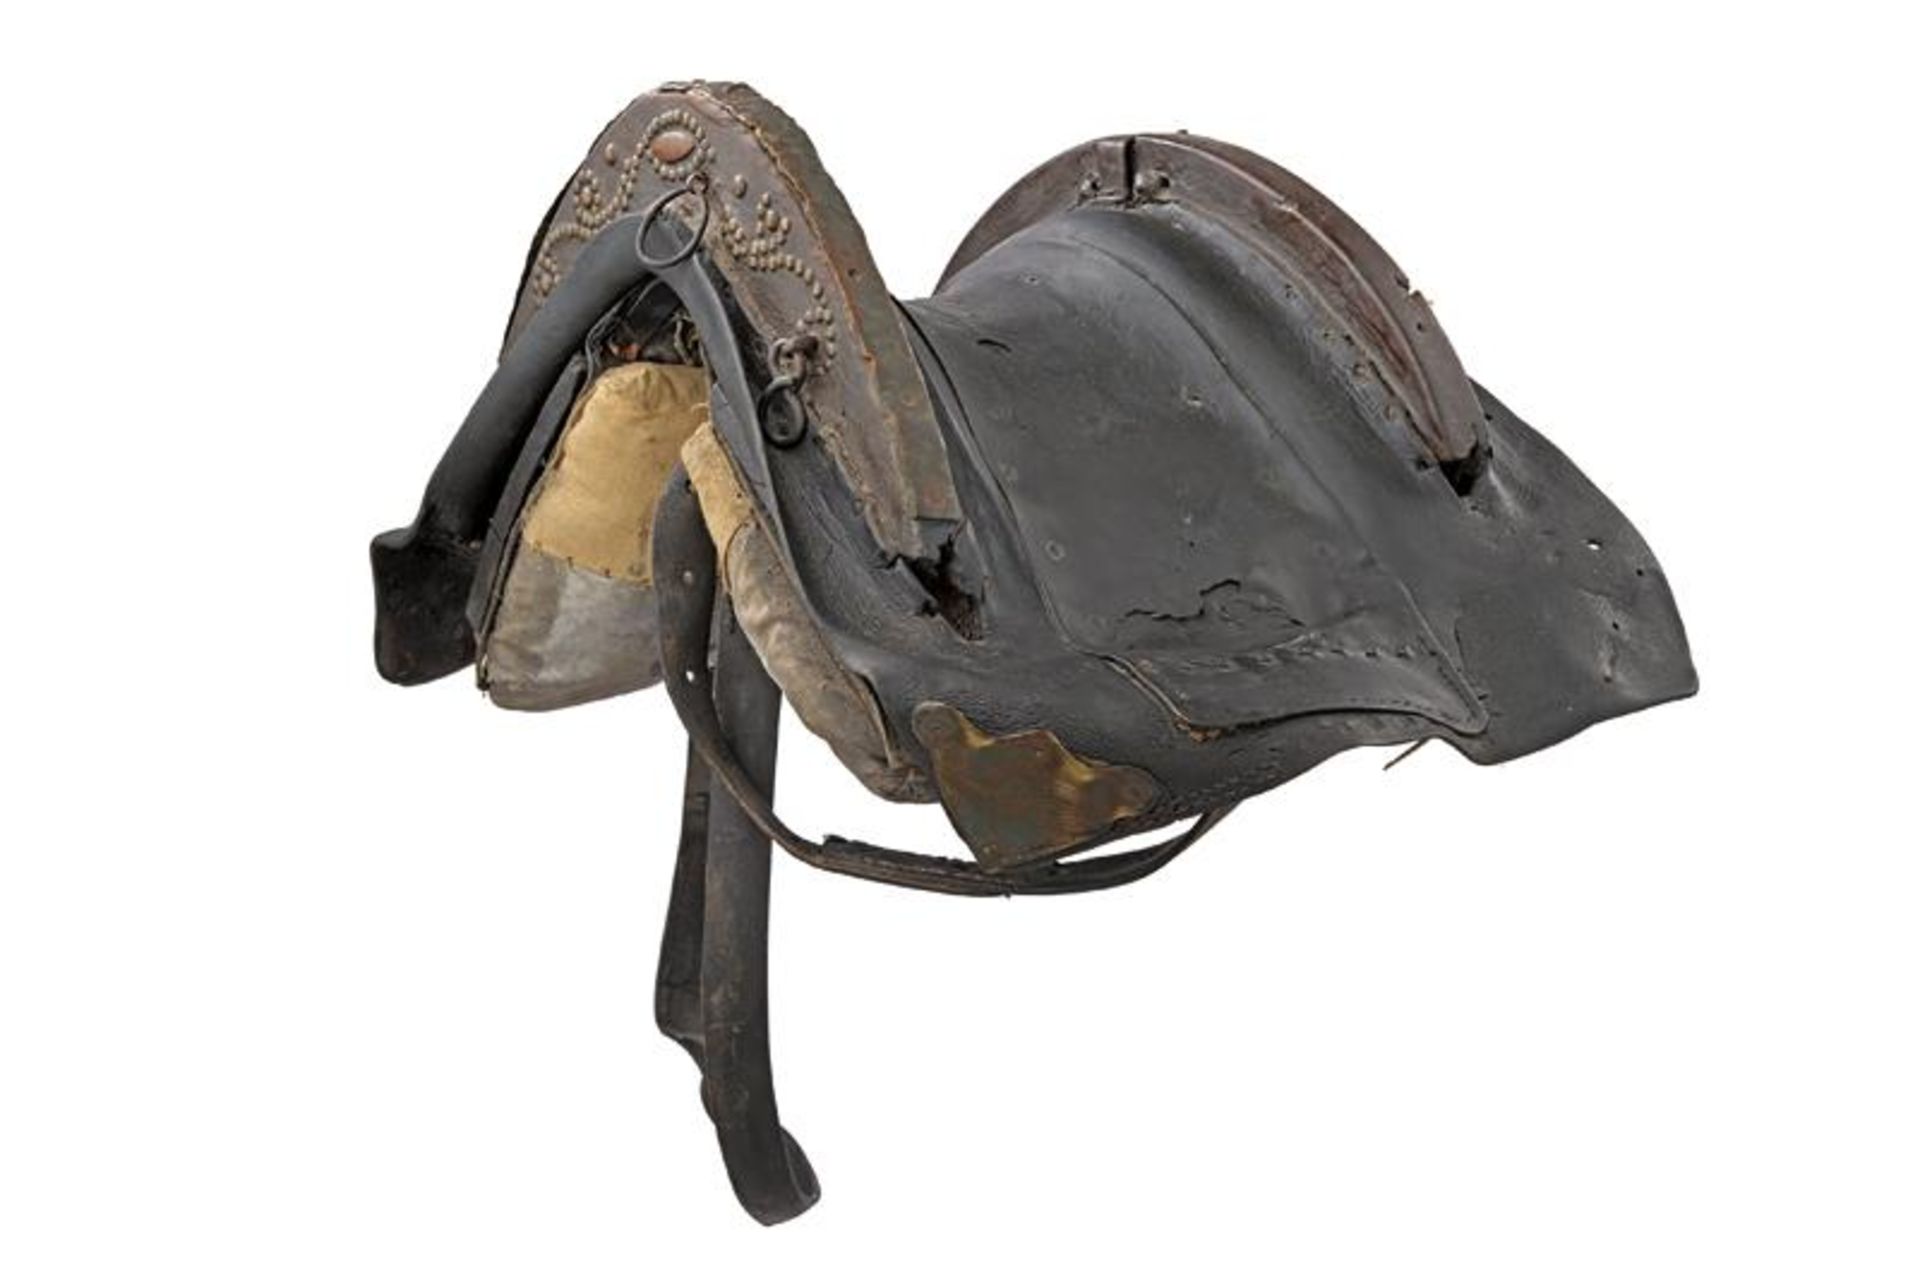 A heavy saddle